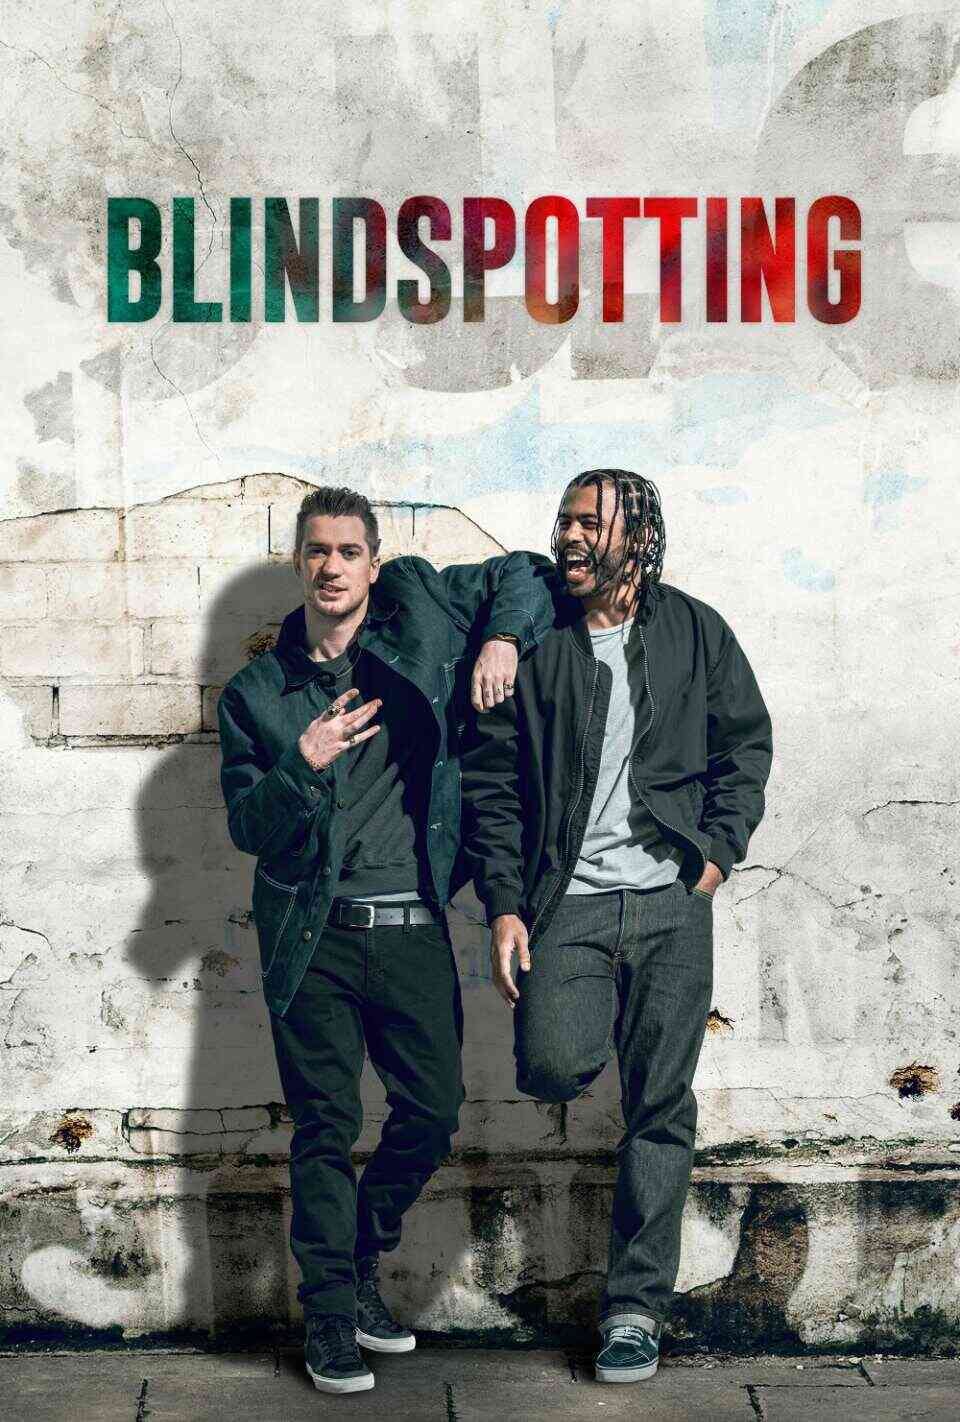 Read Blindspotting screenplay (poster)